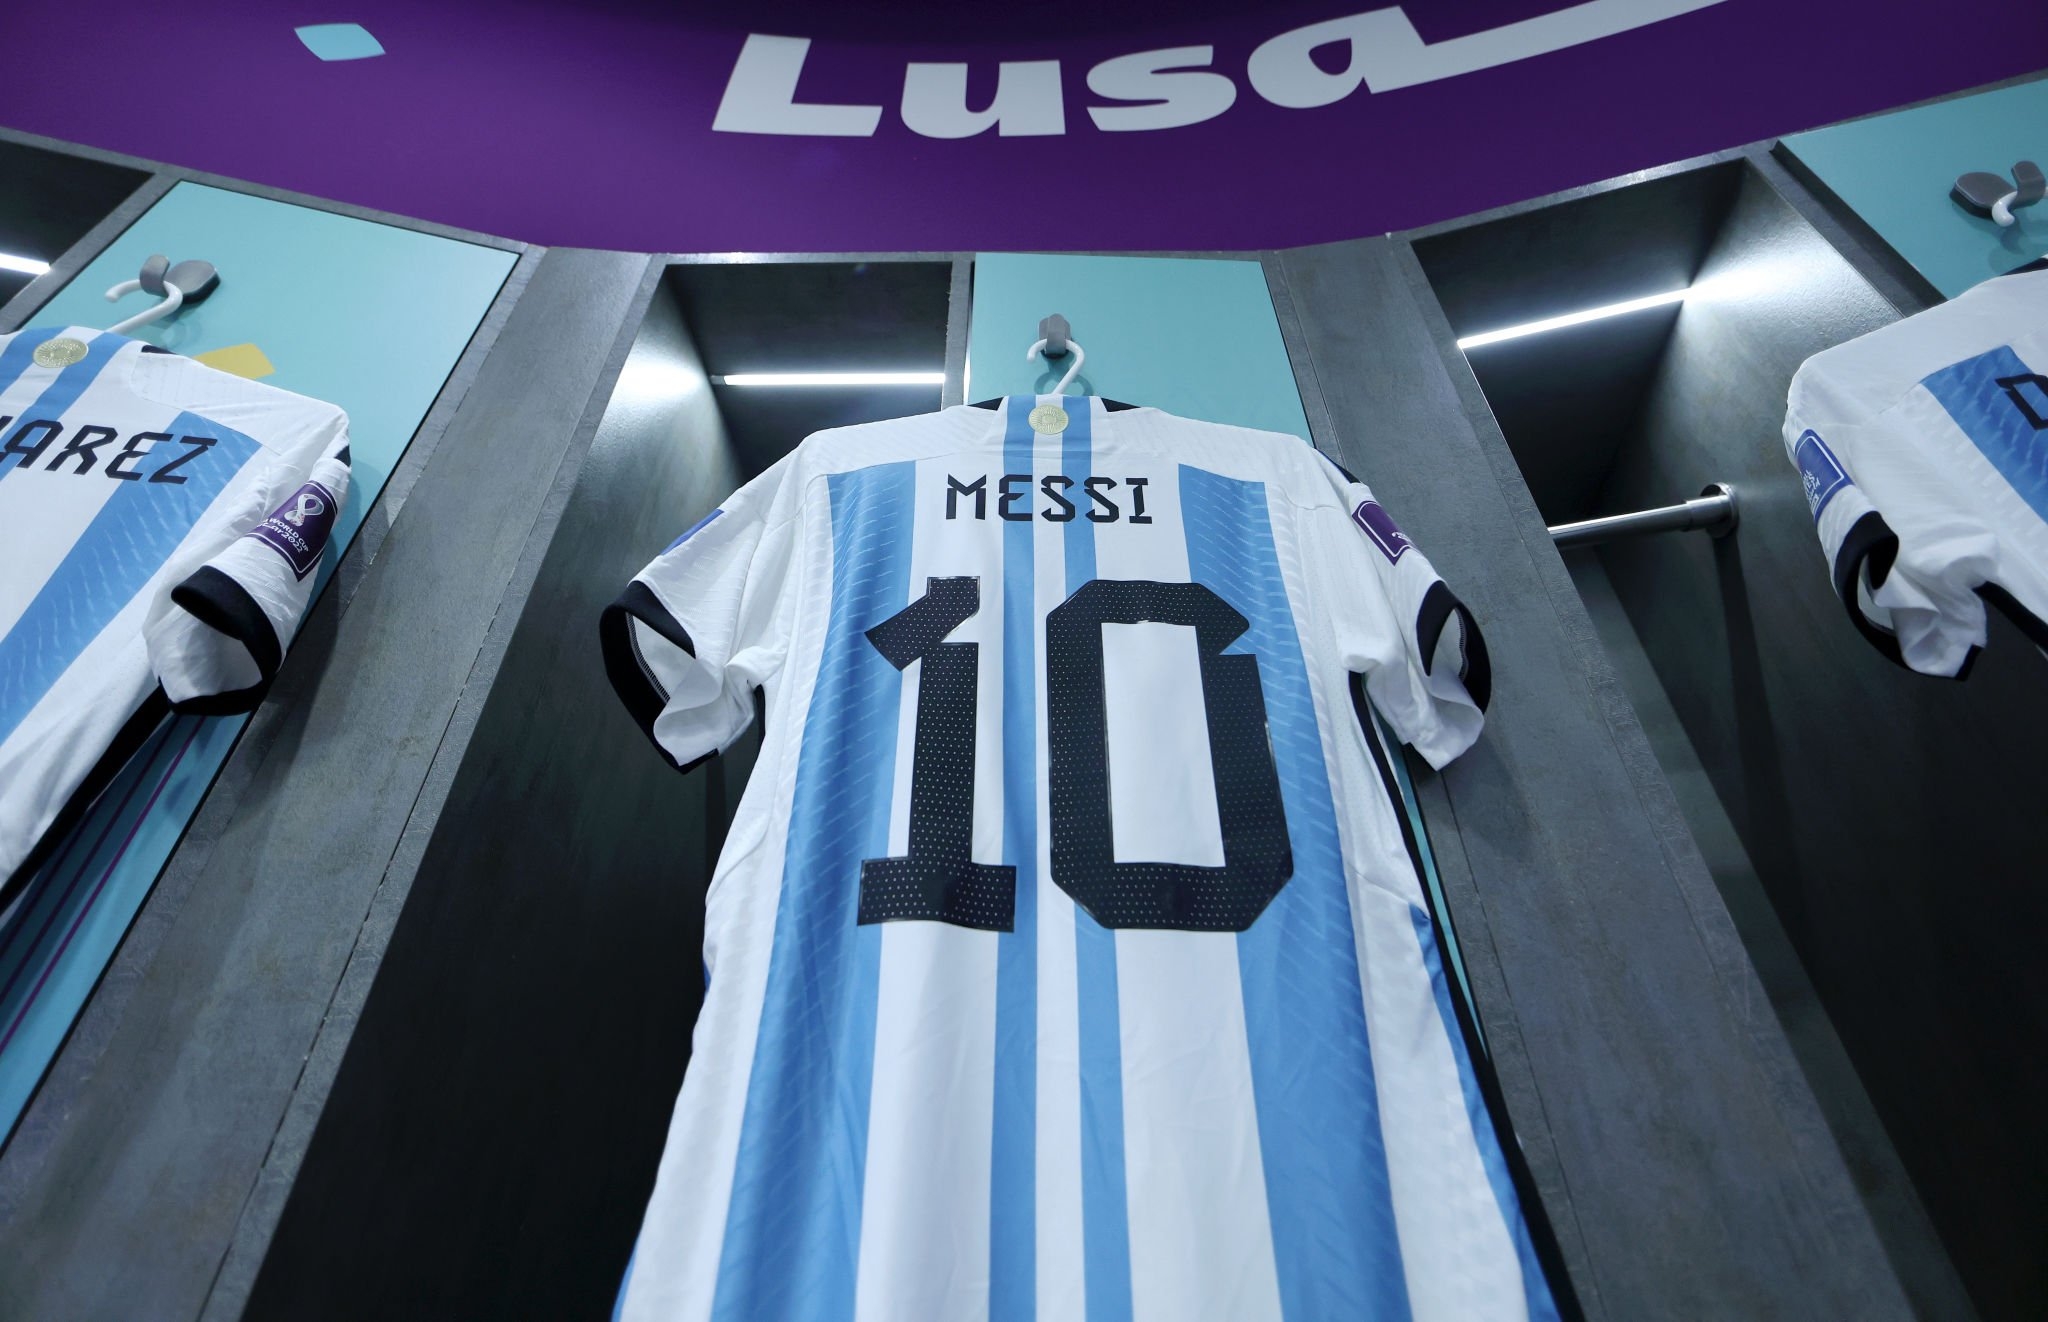 Barça Universal on Twitter: "Image: Messi's shirt inside the locker room. https://t.co/6L2sZZldPd" /